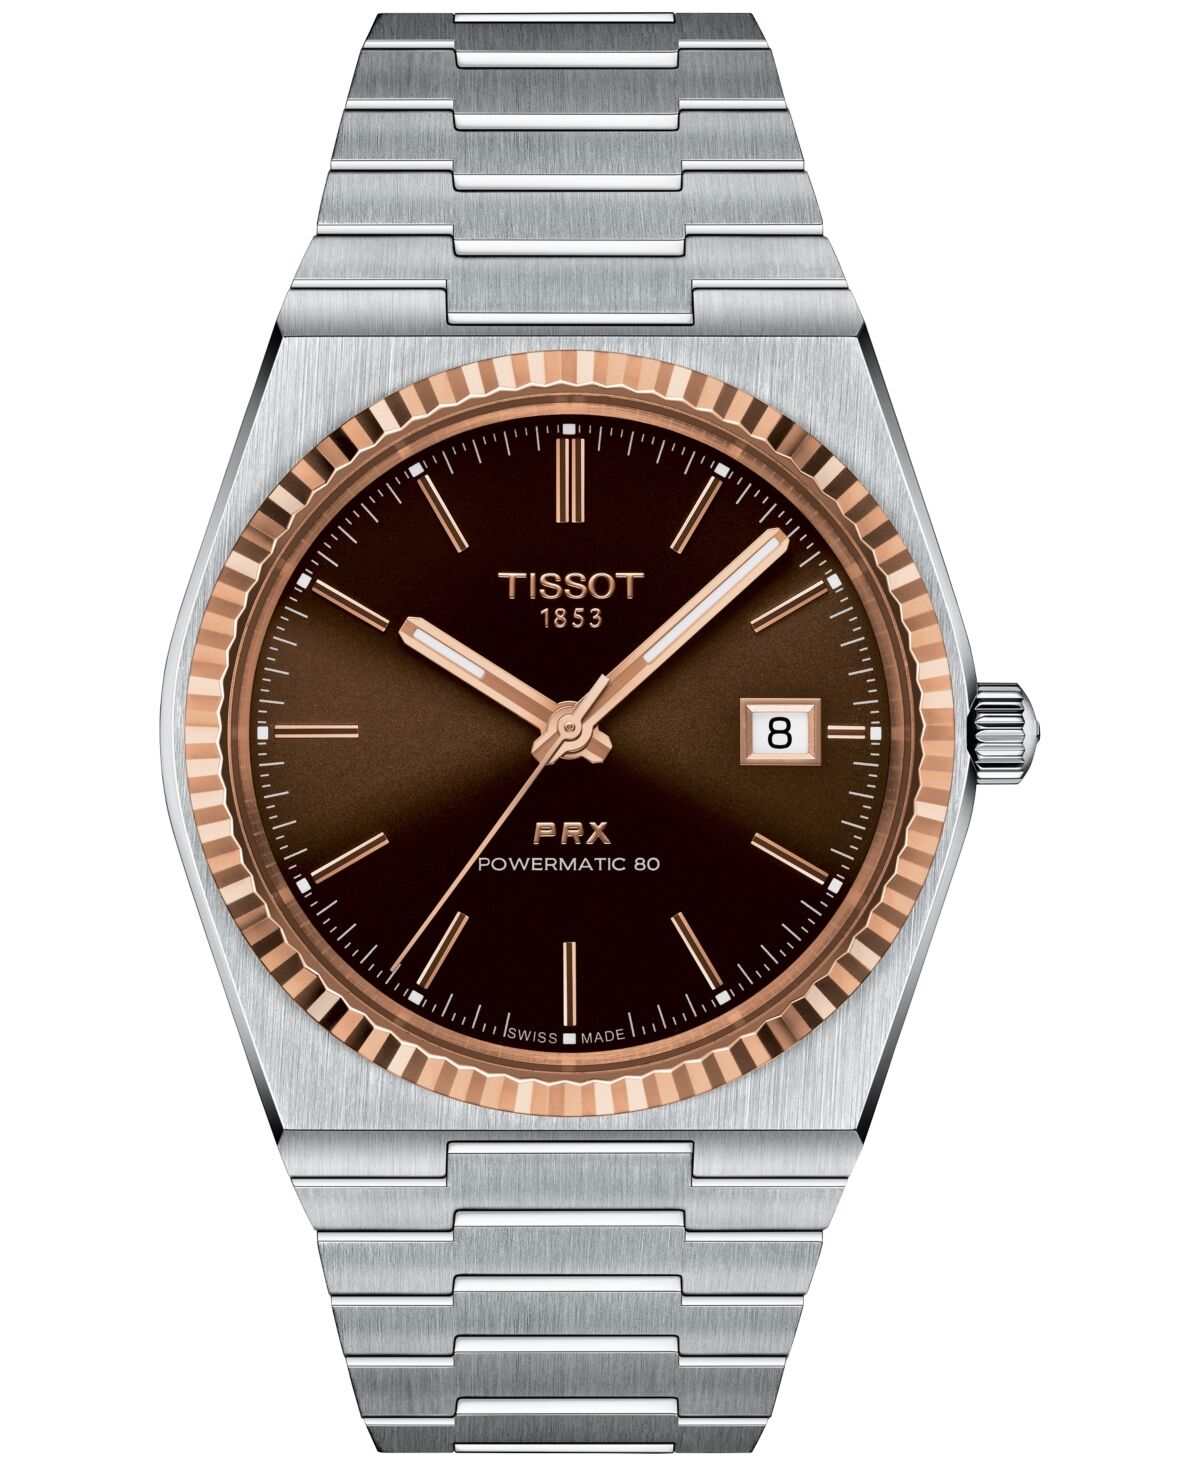 Tissot Men's Prx Powermatic 80 Automatic 18K Gold Stainless Steel Bracelet Watch 40mm - Brown